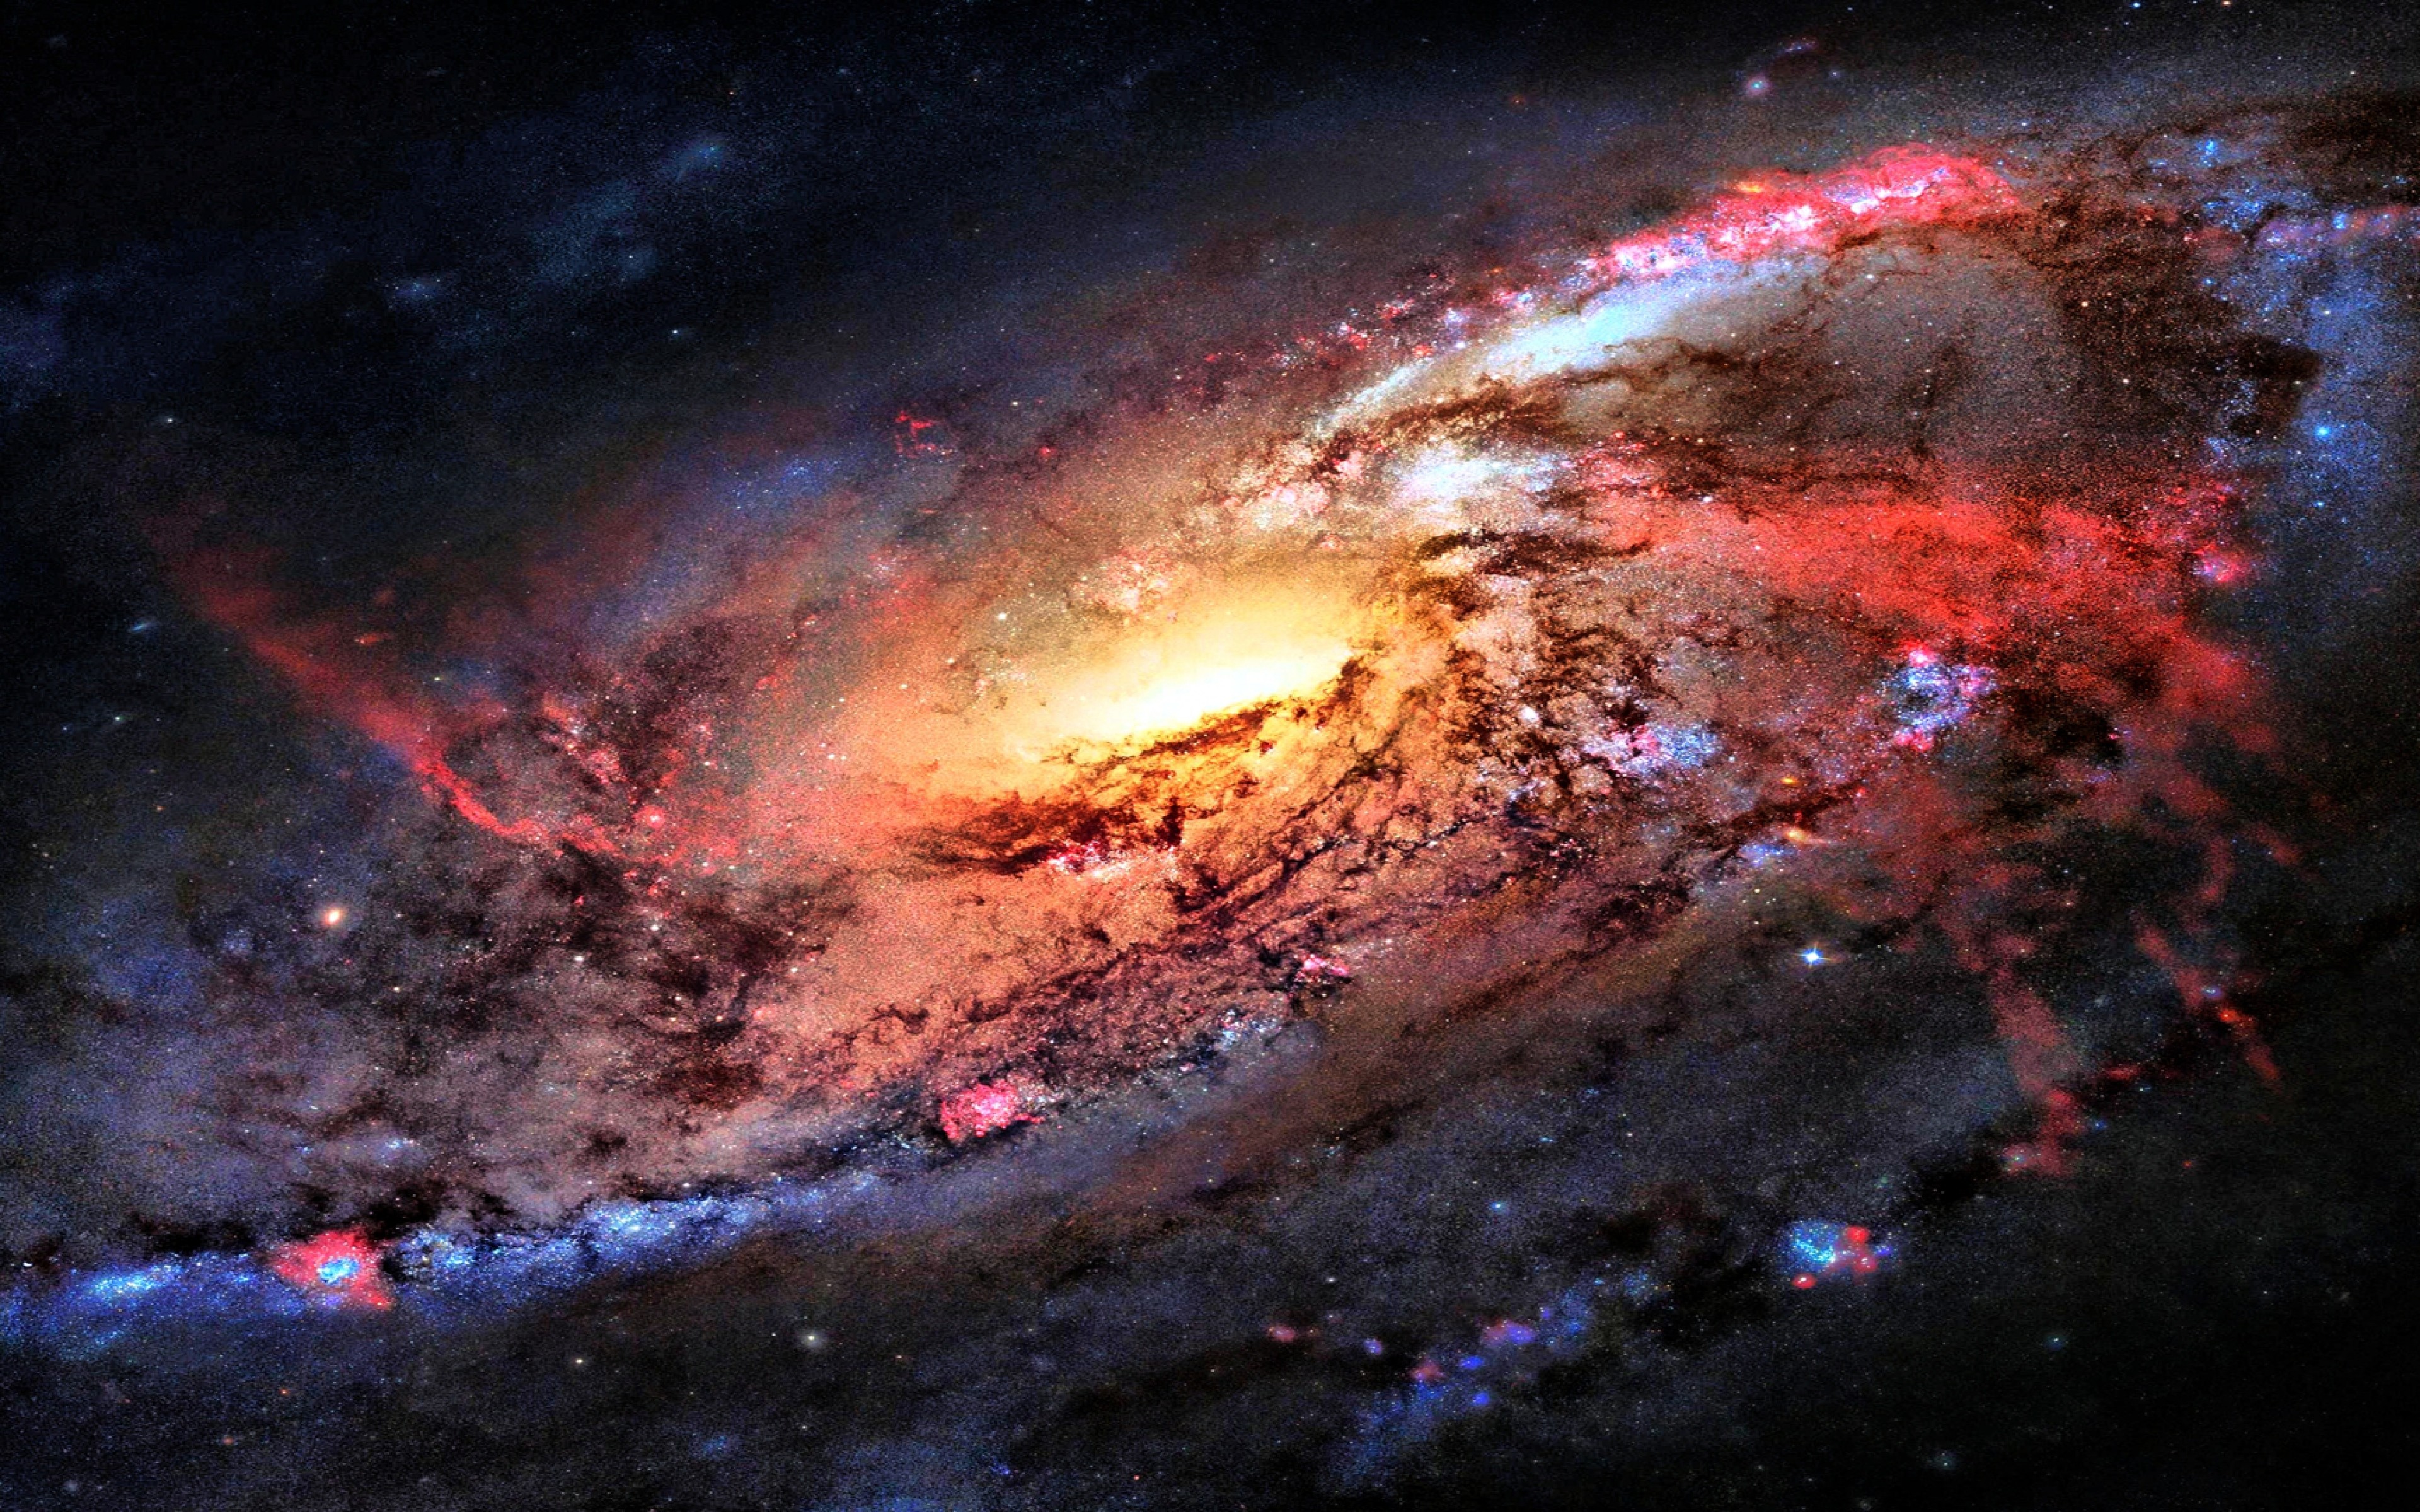 4k Galaxy Space, HD Digital Universe, 4k Wallpapers, Images ...